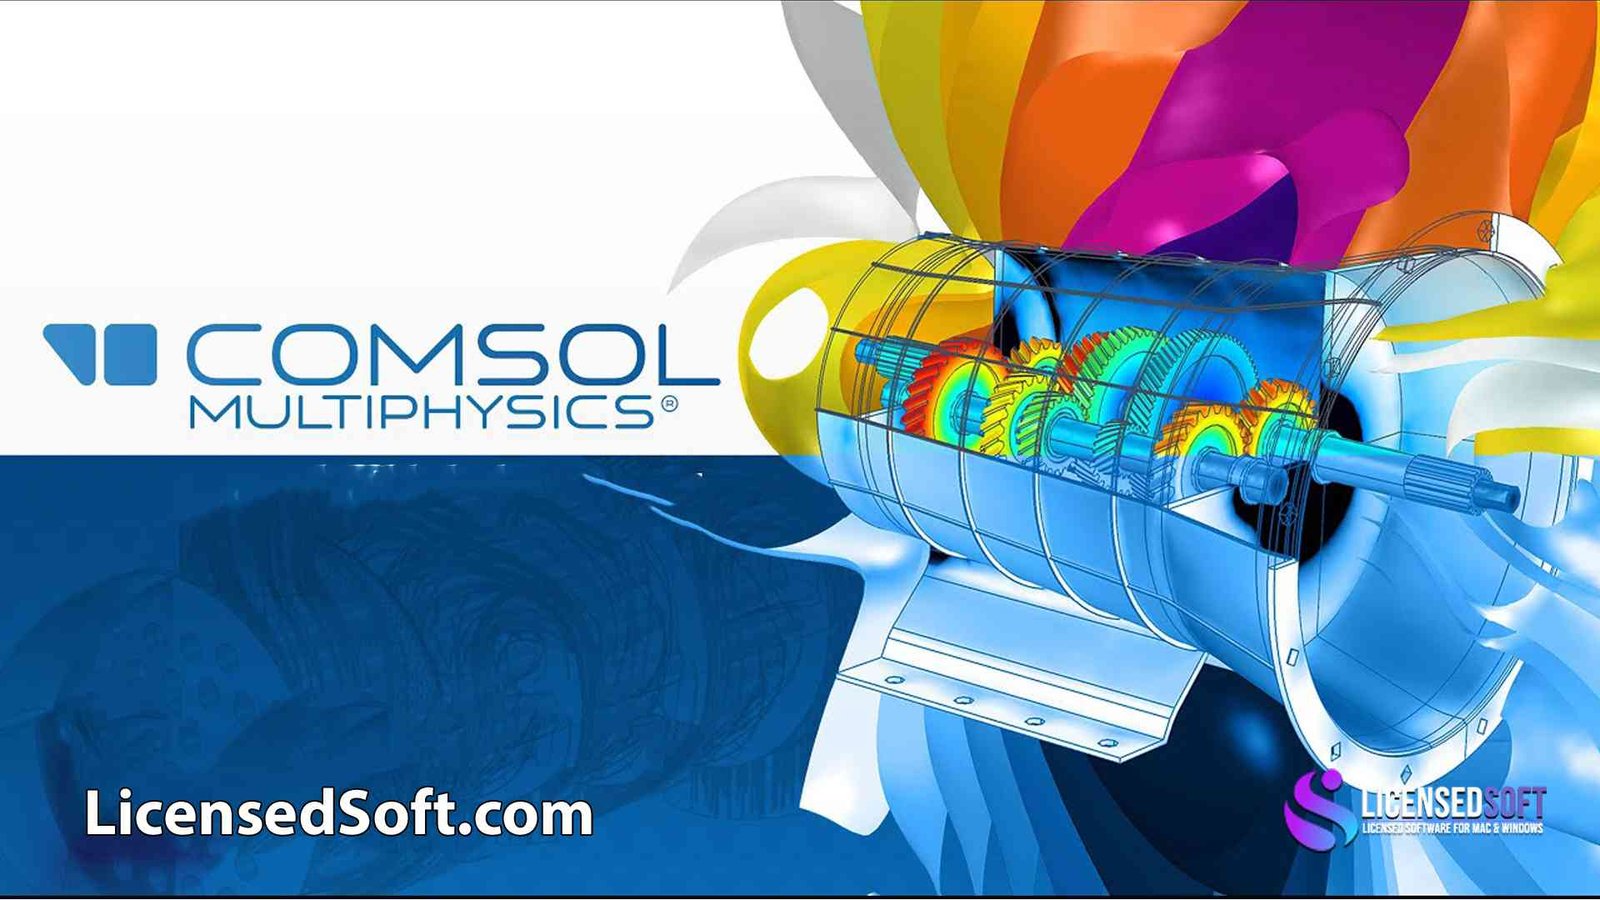 Comsol Multiphysics 6.1.282 Full Version Cover Image By LicensedSoft